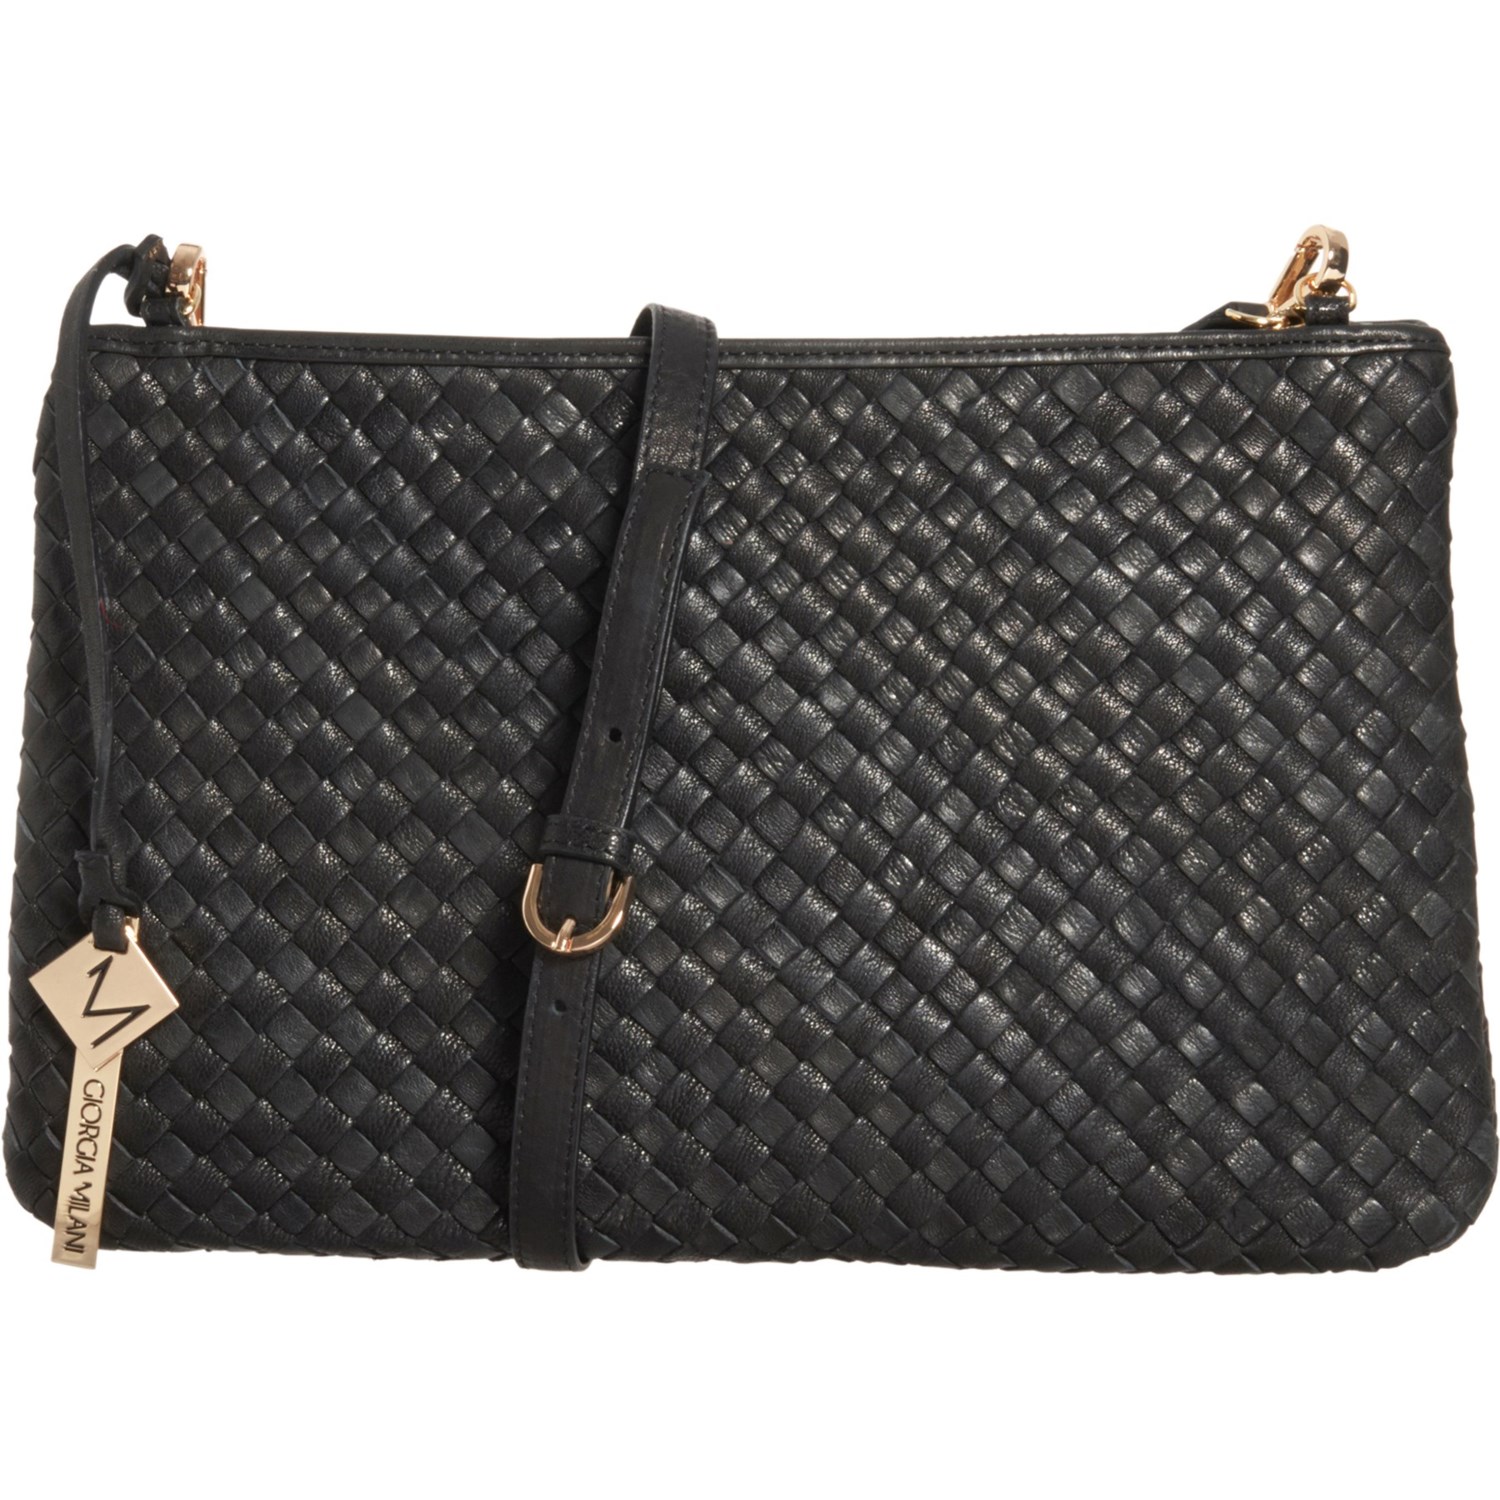 Giorgia Milani Made in Italy Black Wow Texas Crossbody Bag (For Women) - Save 60%